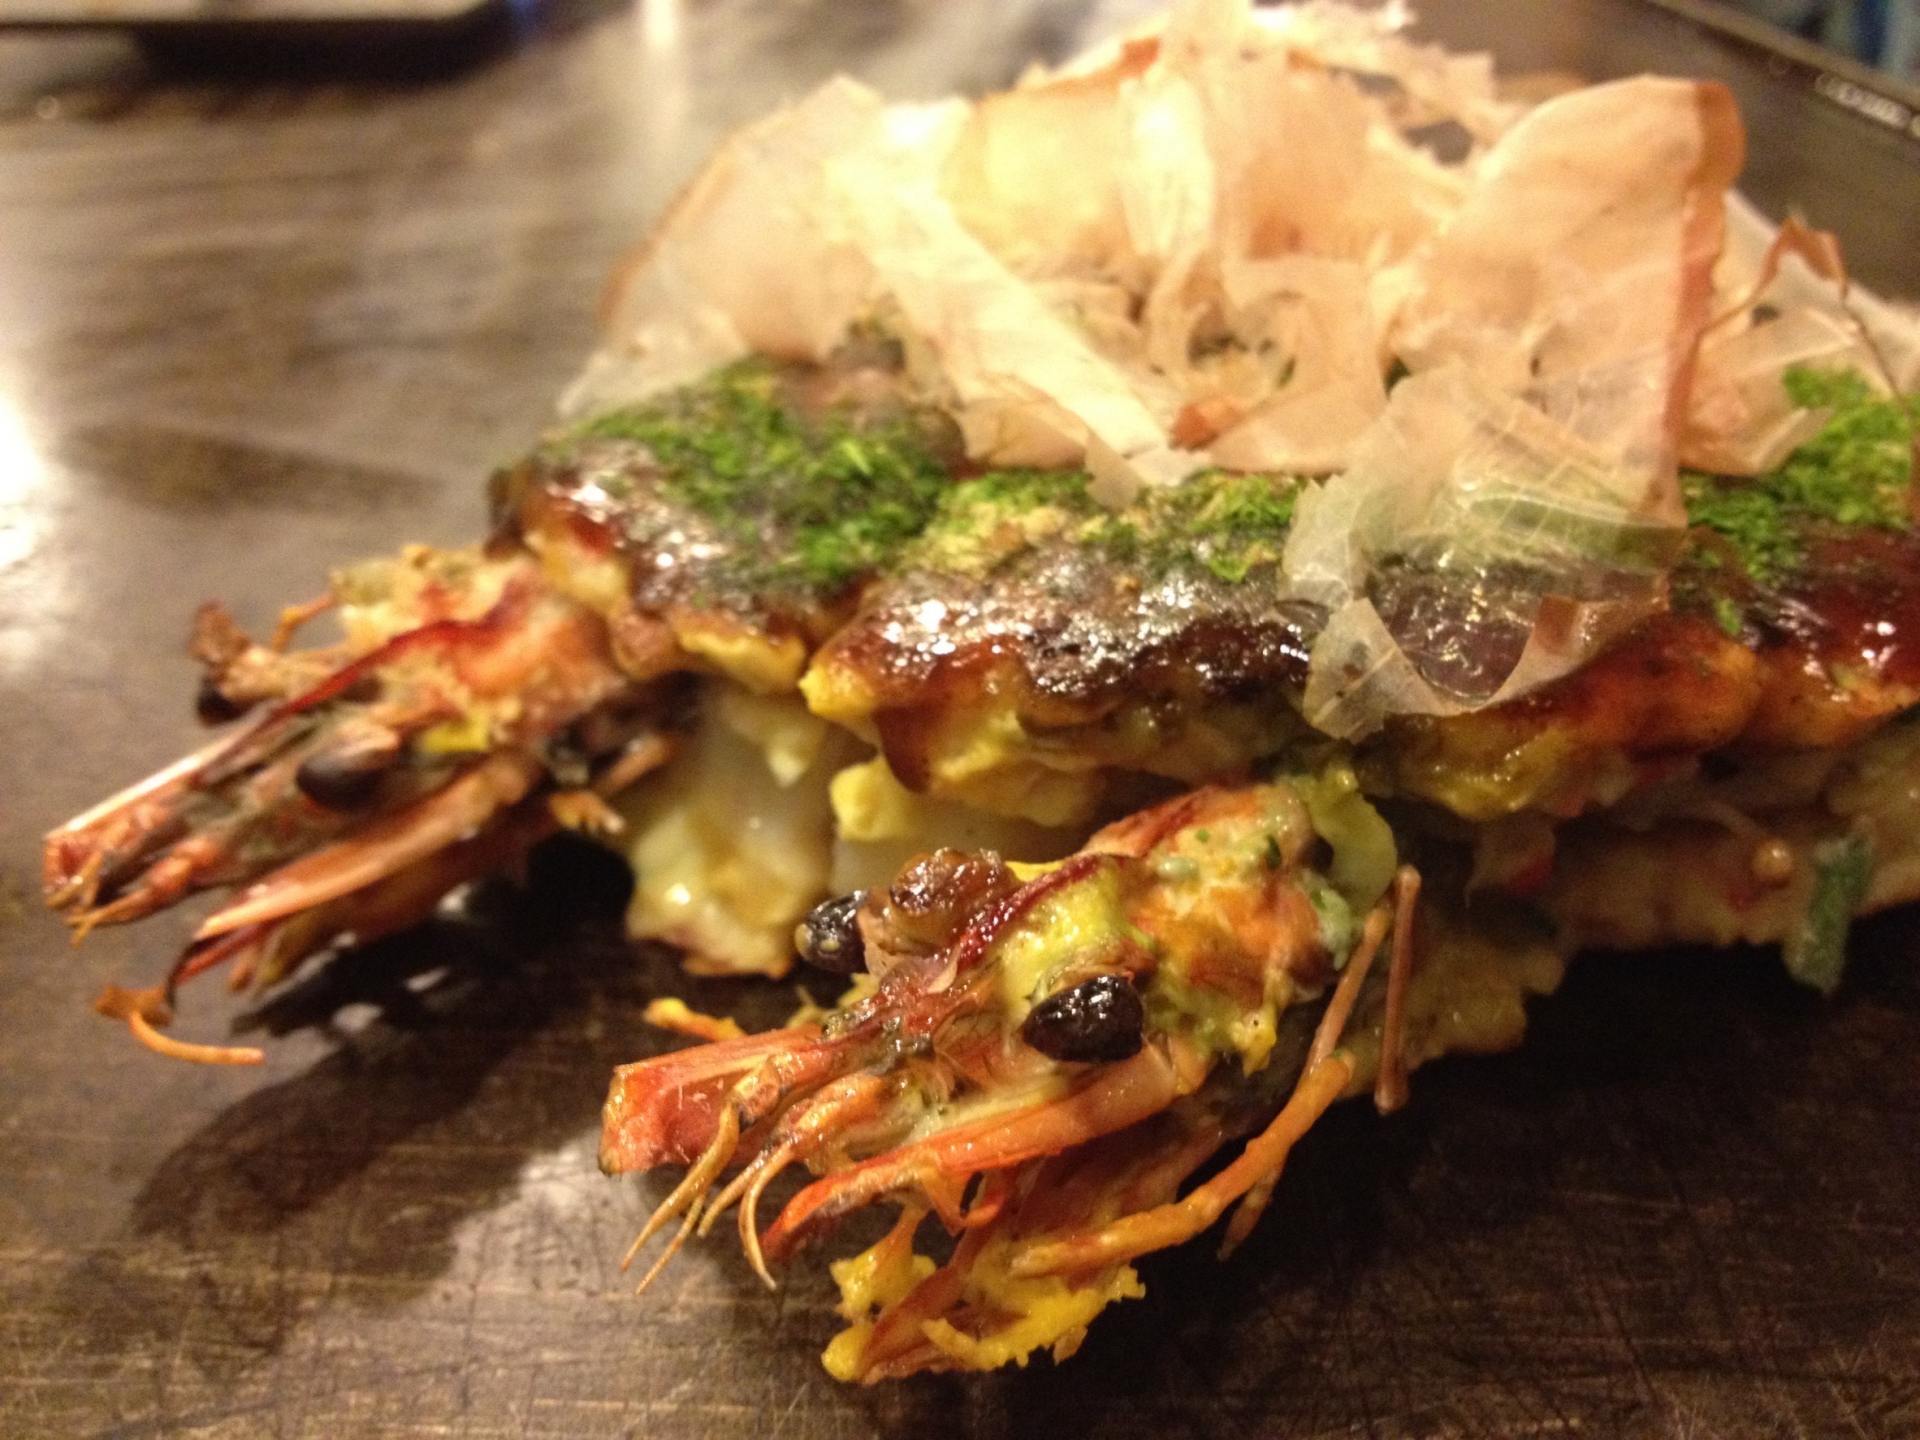 The "Botefuku Tokusei-yaki" is an extravagant dish containing two prawns